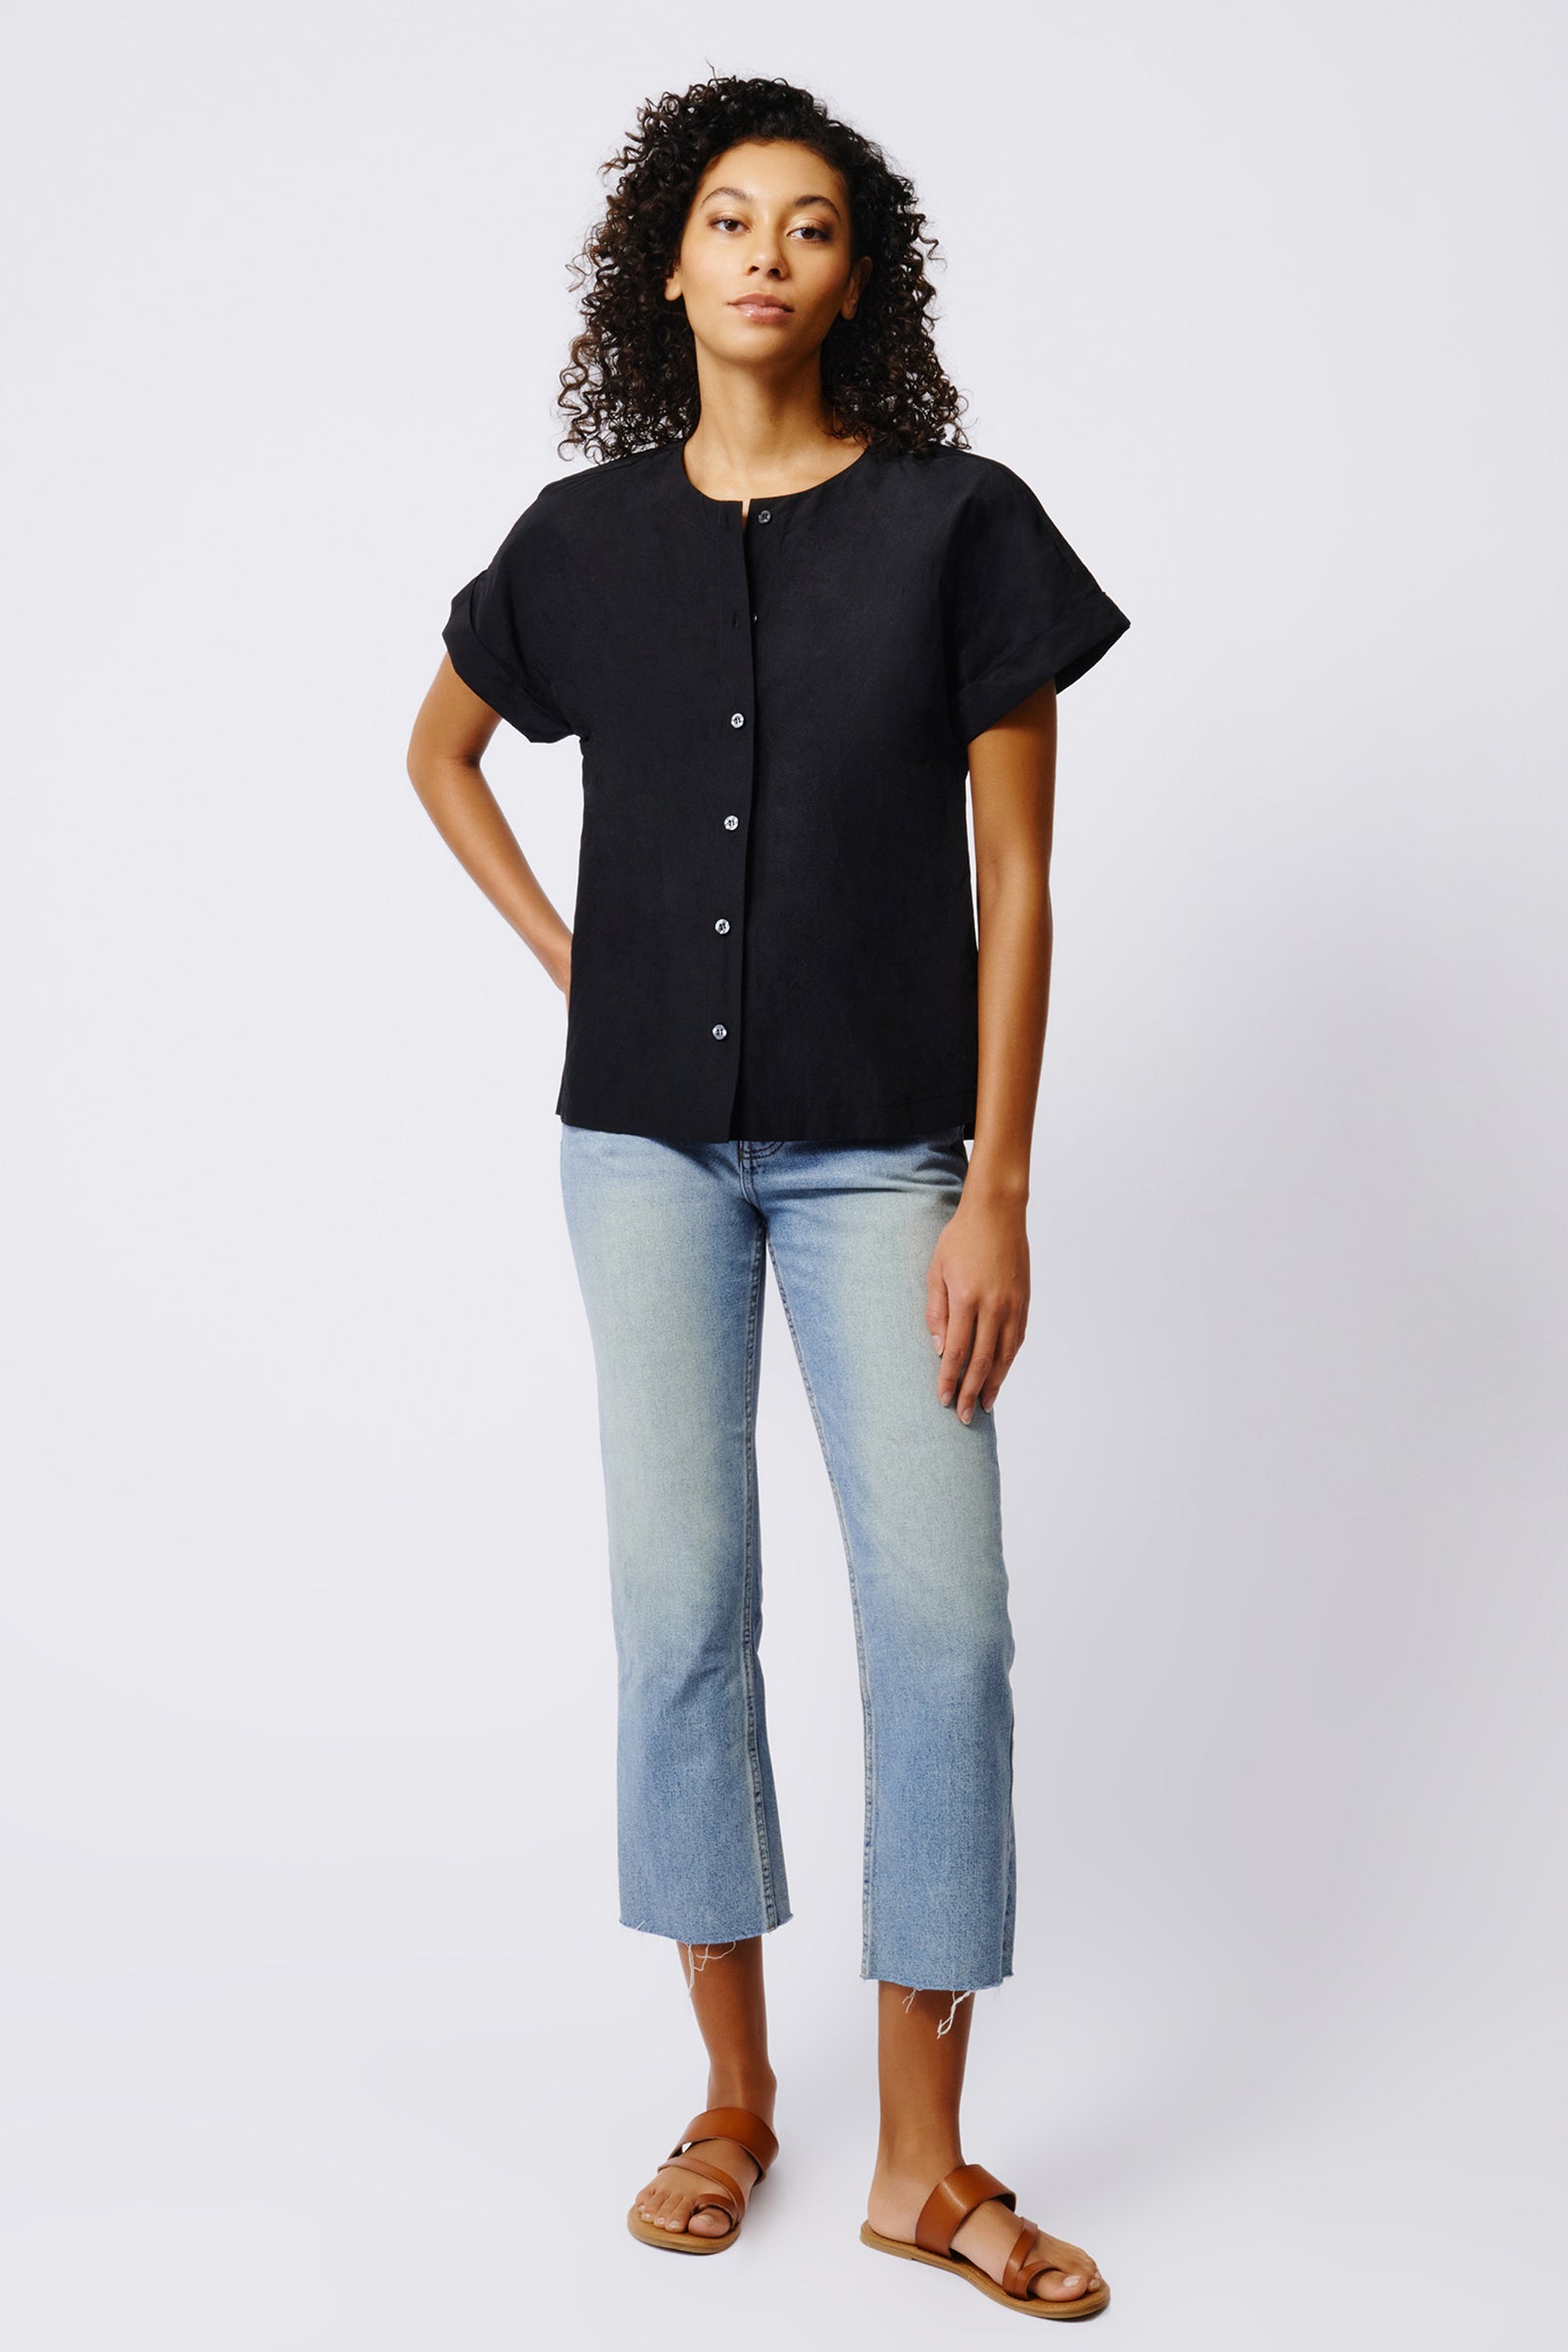 Kal Rieman Natalie Short Sleeve Placket Shirt in Black on Model Full Front View